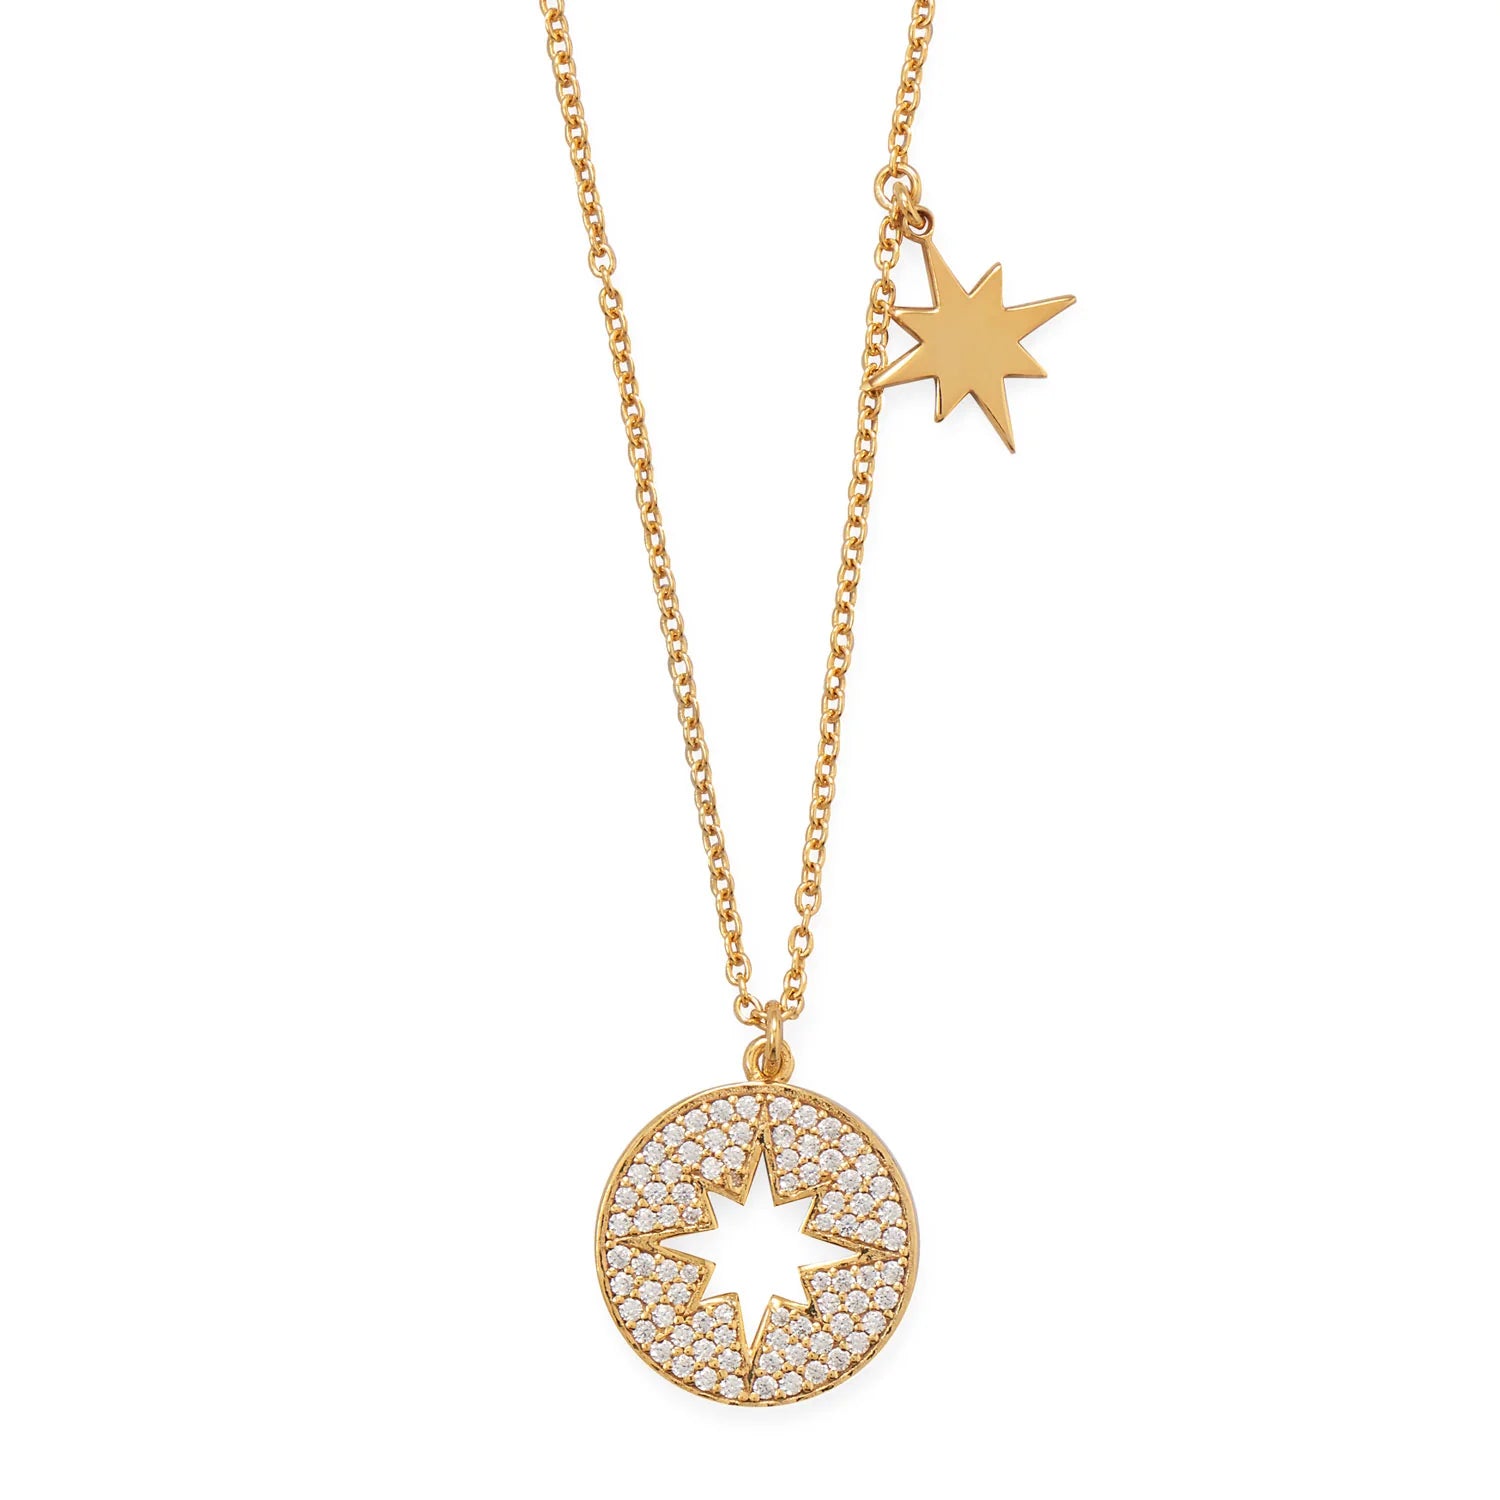 6" 14 Karat Gold Plated CZ Cut Out Starburst Necklace - M H W ACCESSORIES LLC